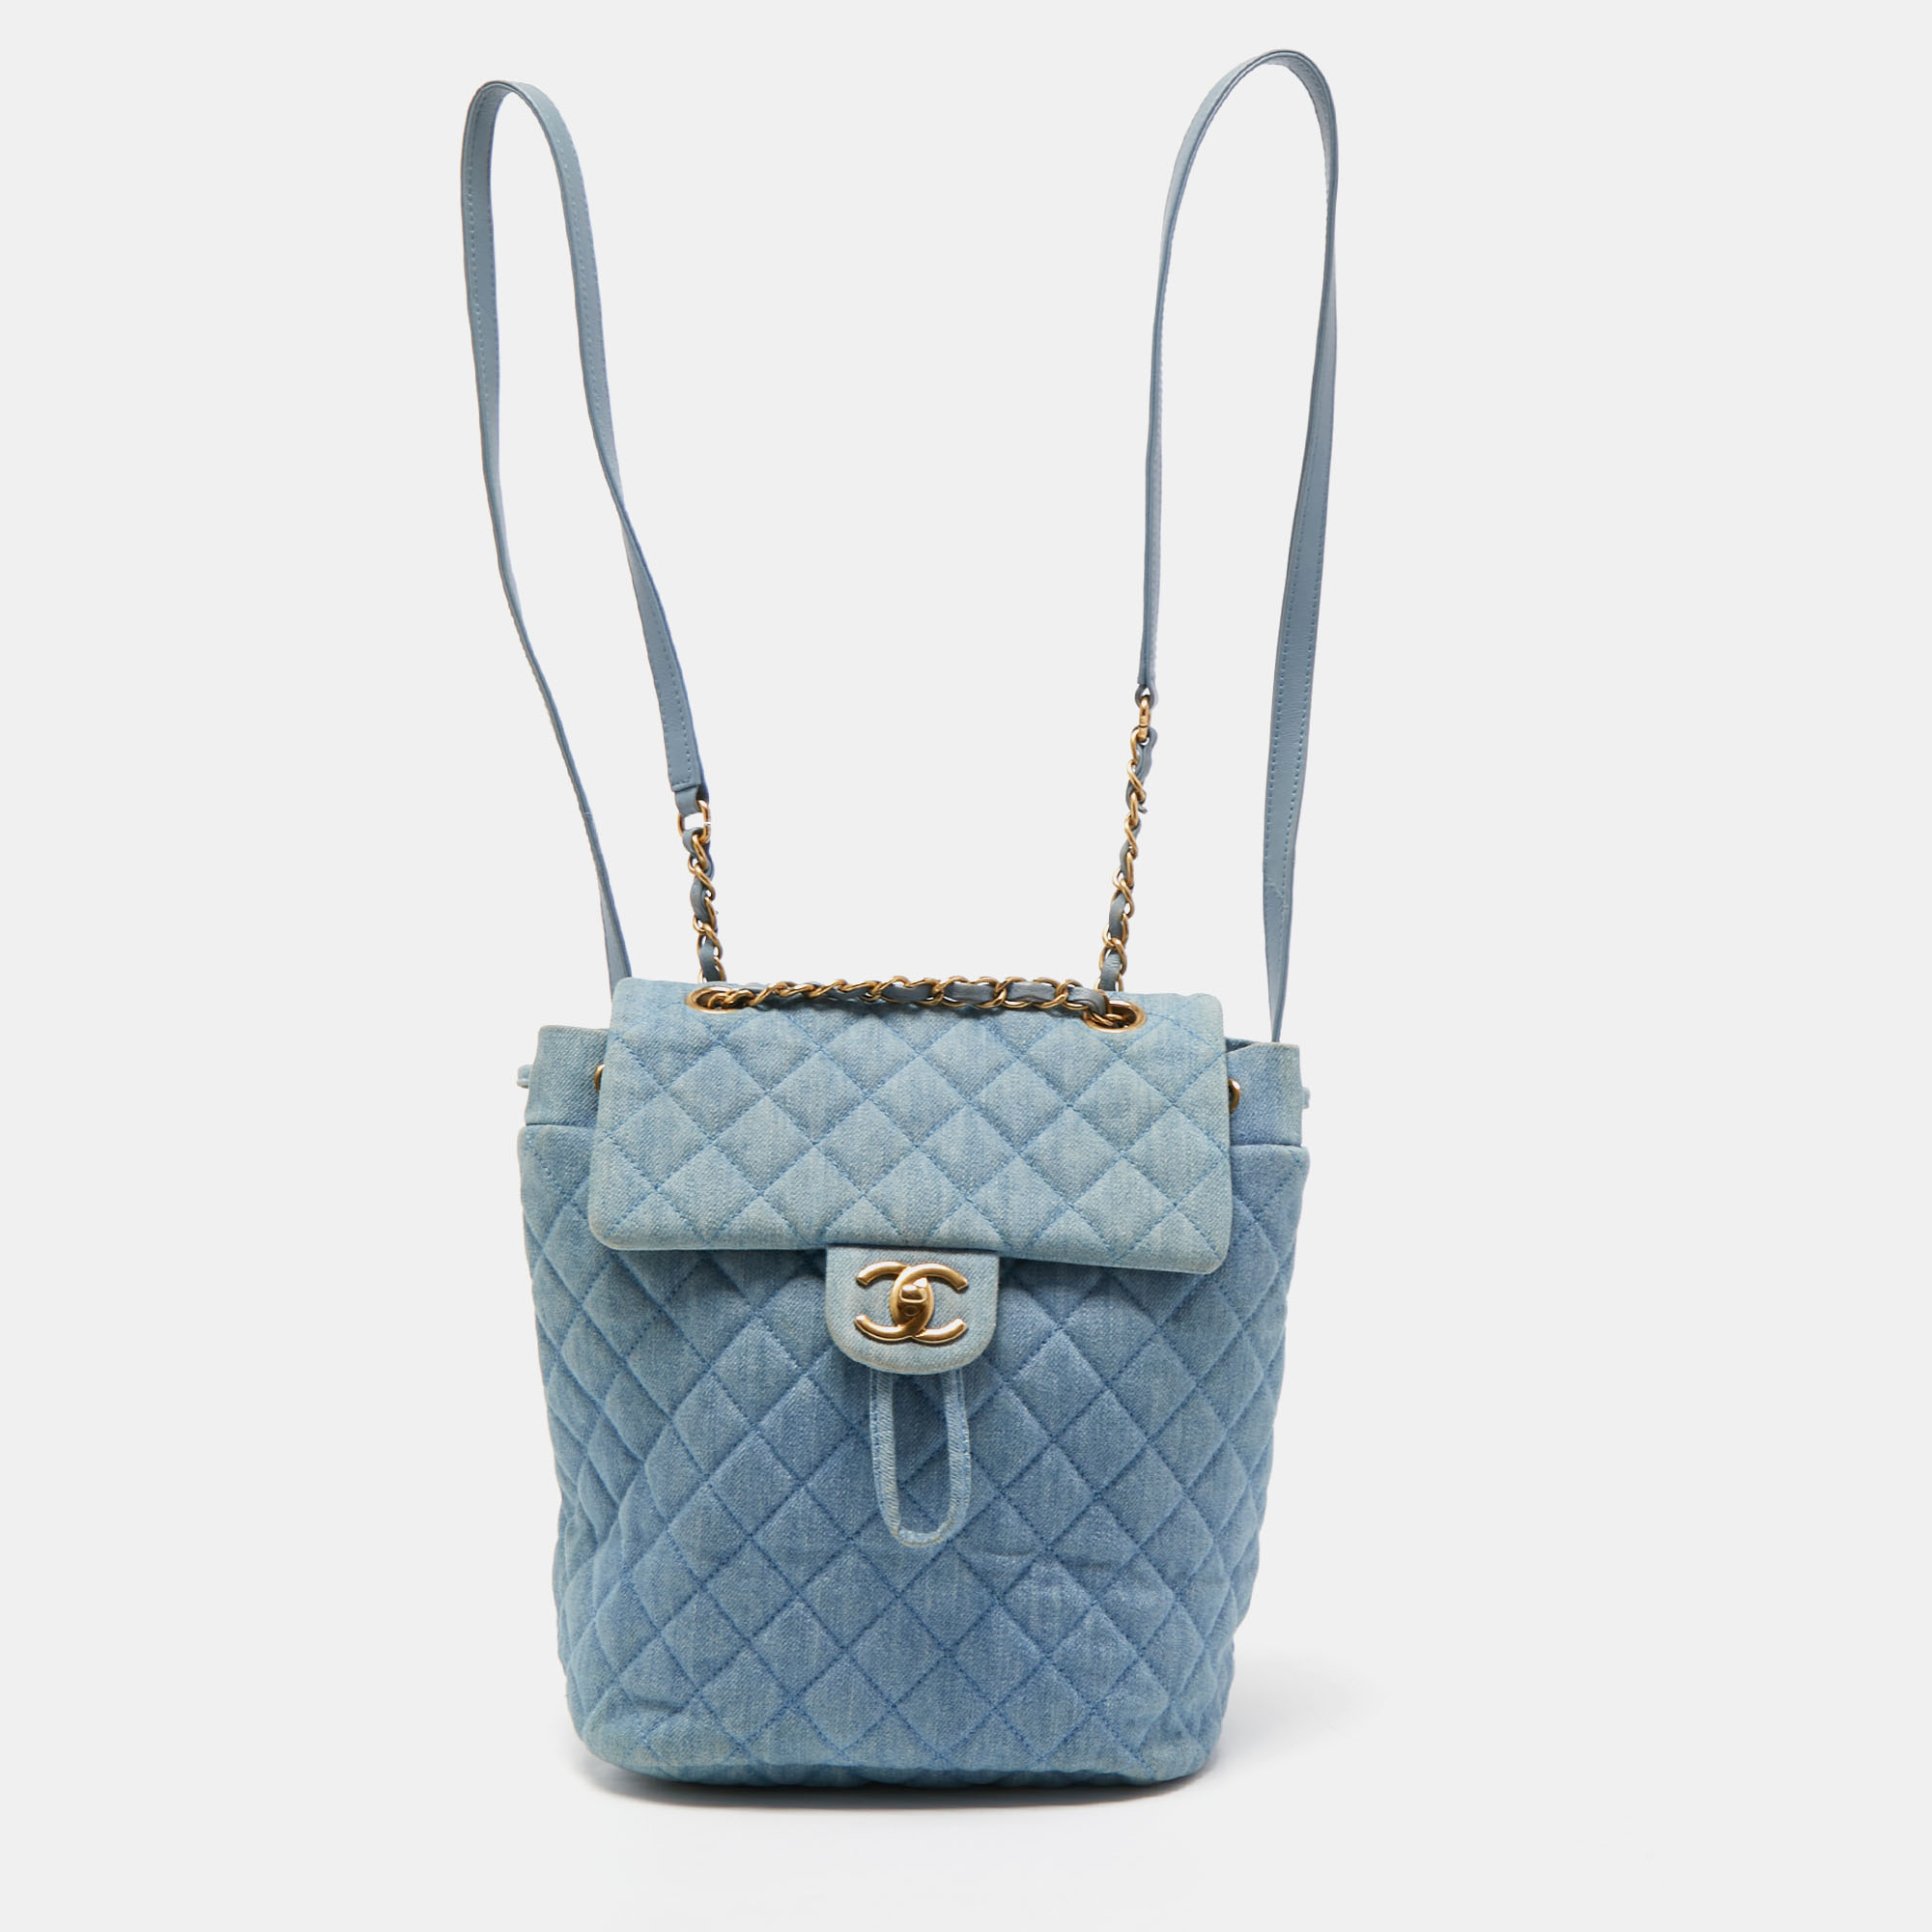 Chanel 22 handbag